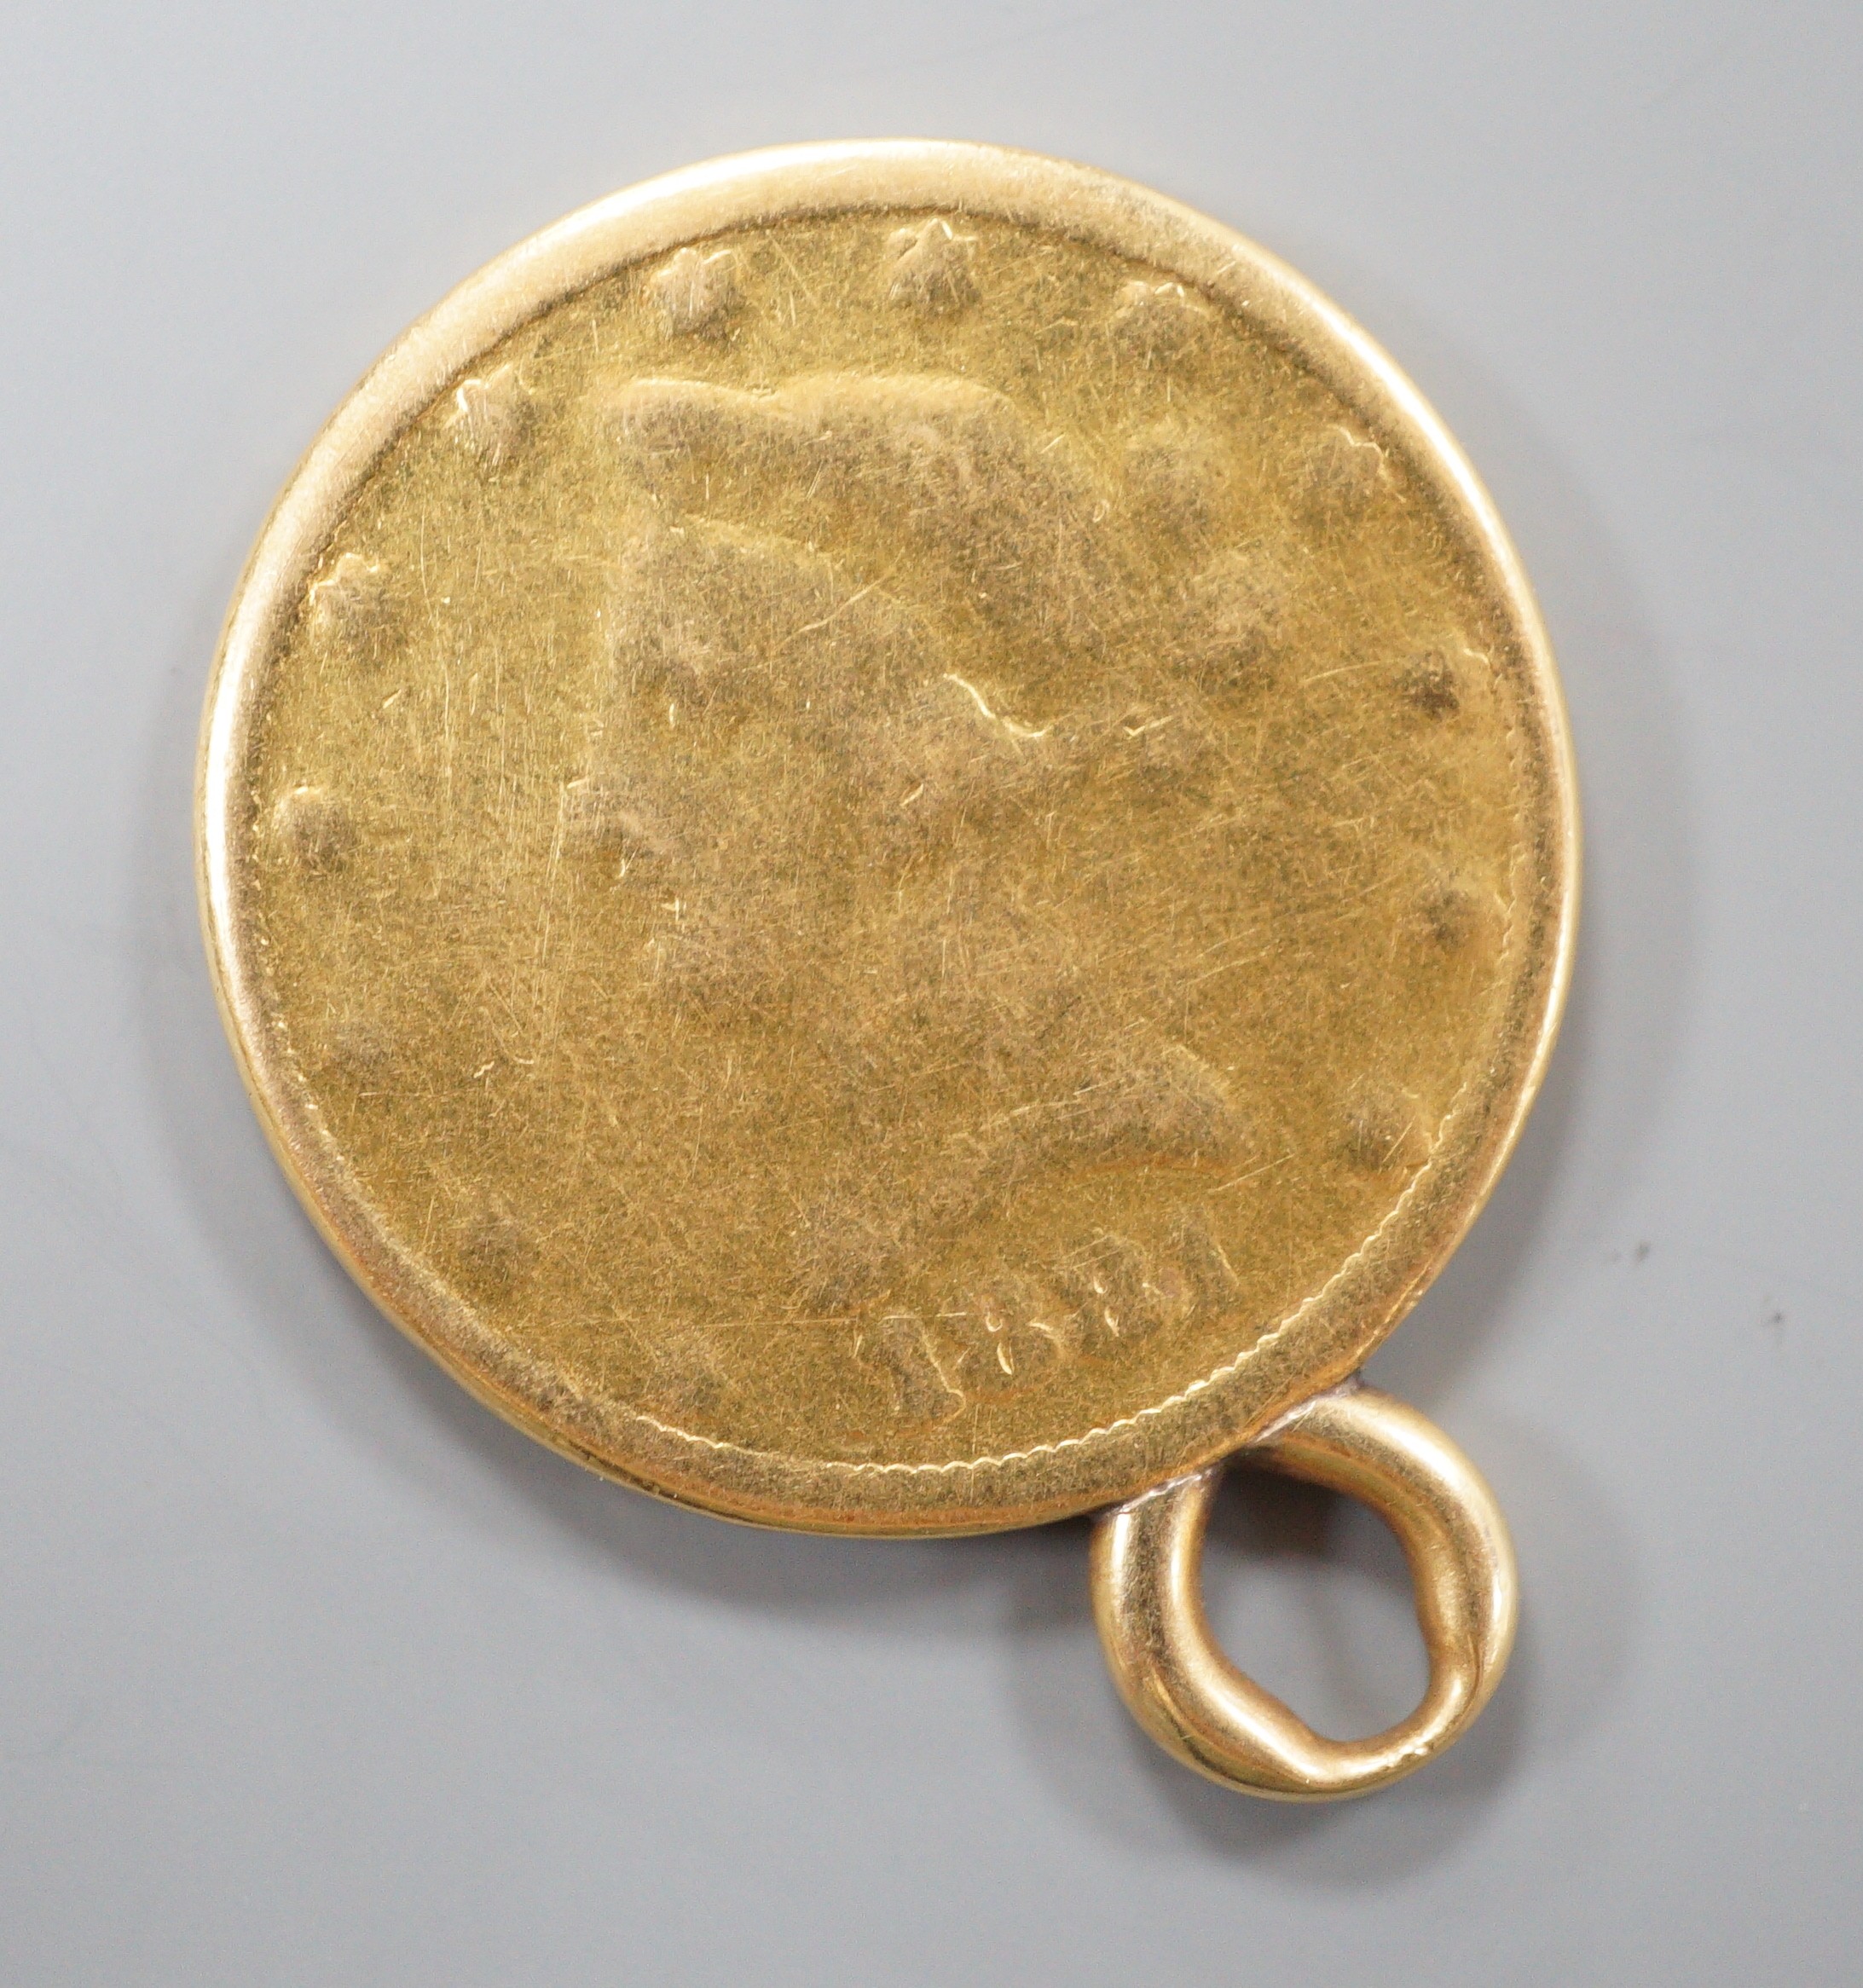 A worn gold dollar coin, now mounted as a pendant, 16.4 grams.